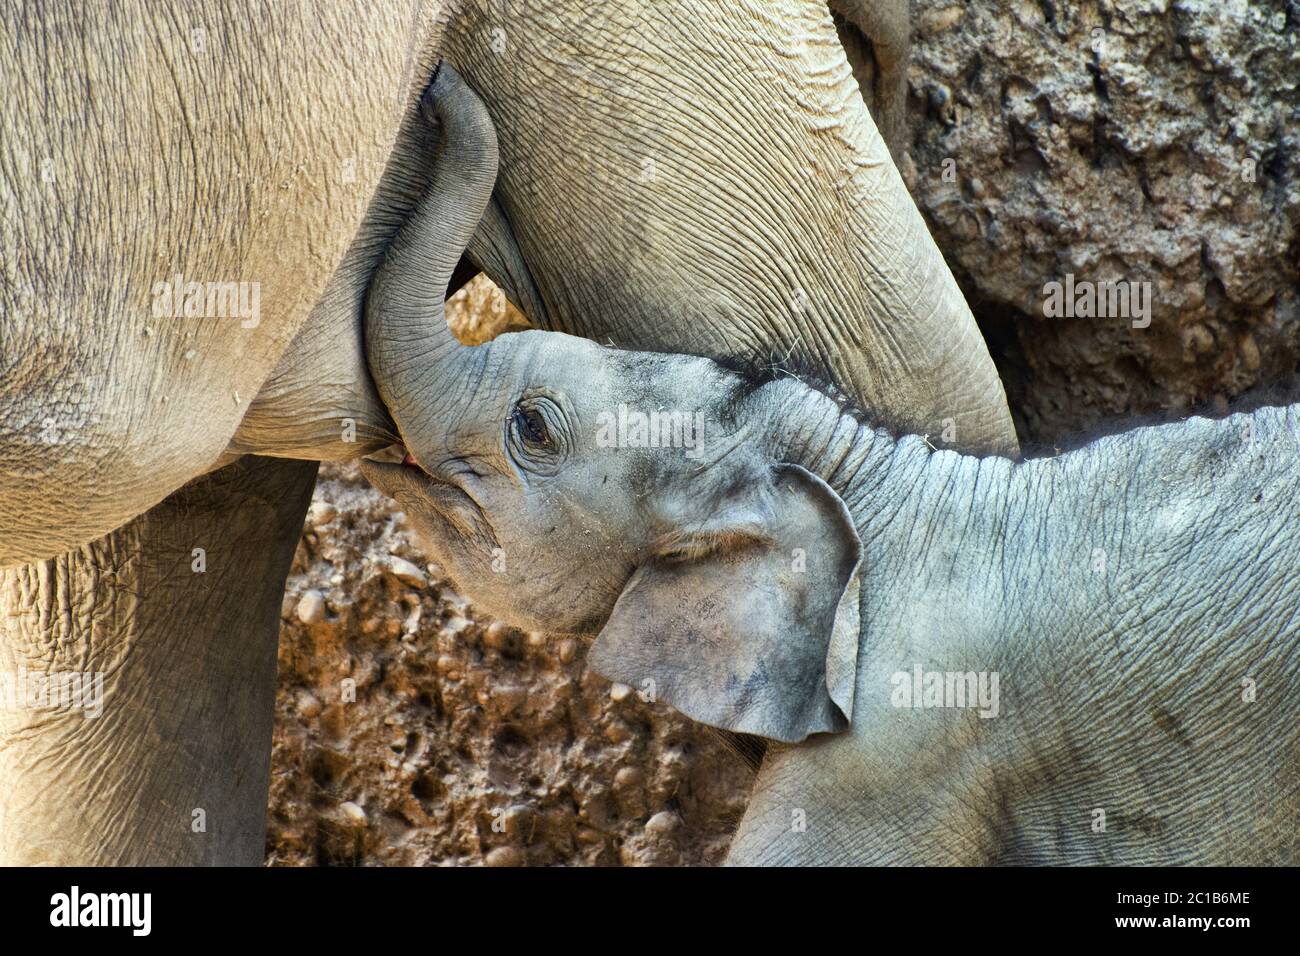 Asiatic elephant calf - Elephas maximus Stock Photo